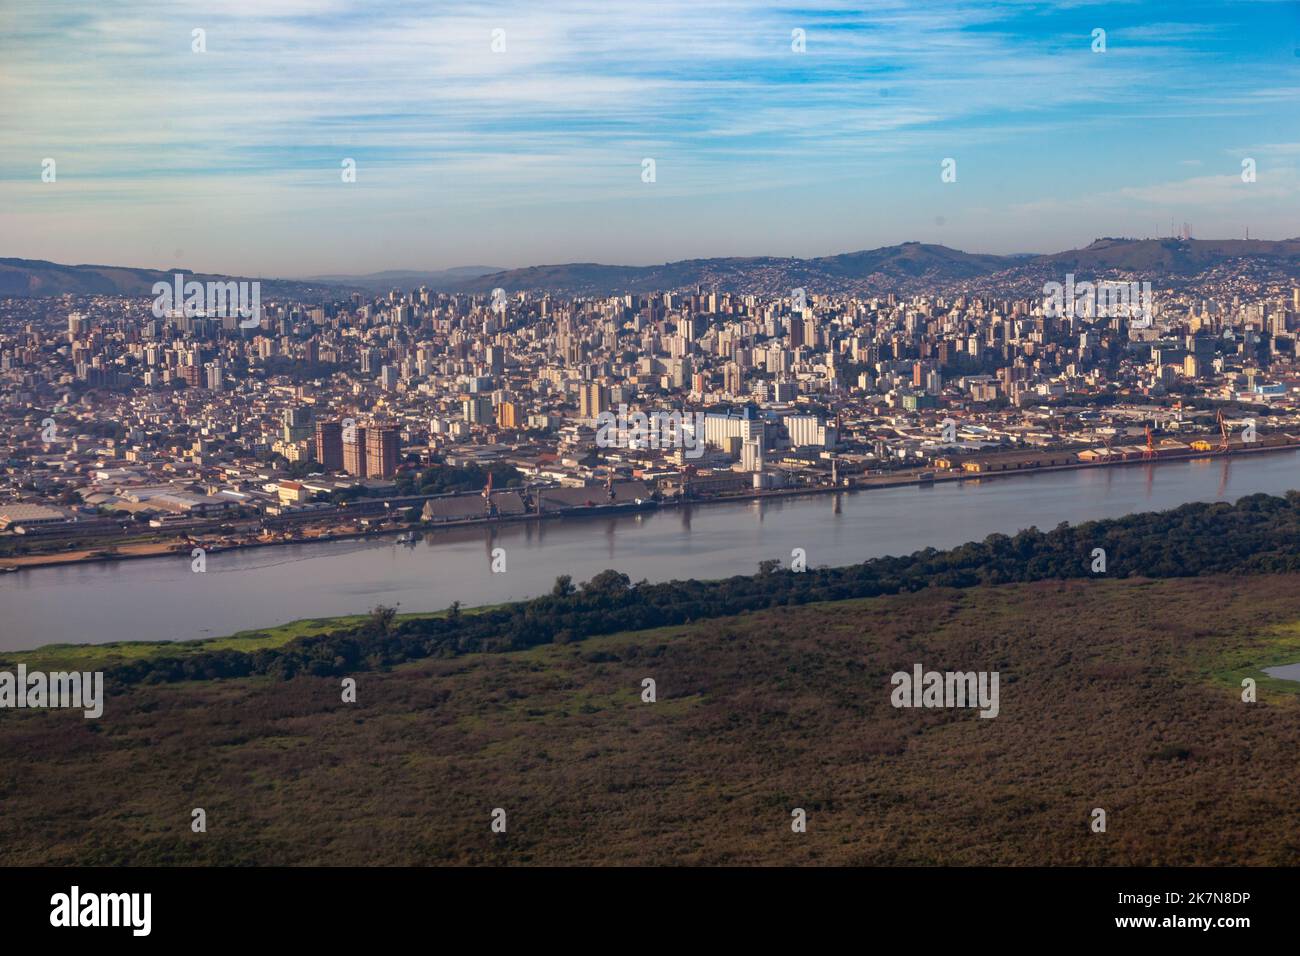 An aerial view of the City of Porto Alegre from the air, Rio Grande do Sul, Brazil Stock Photo